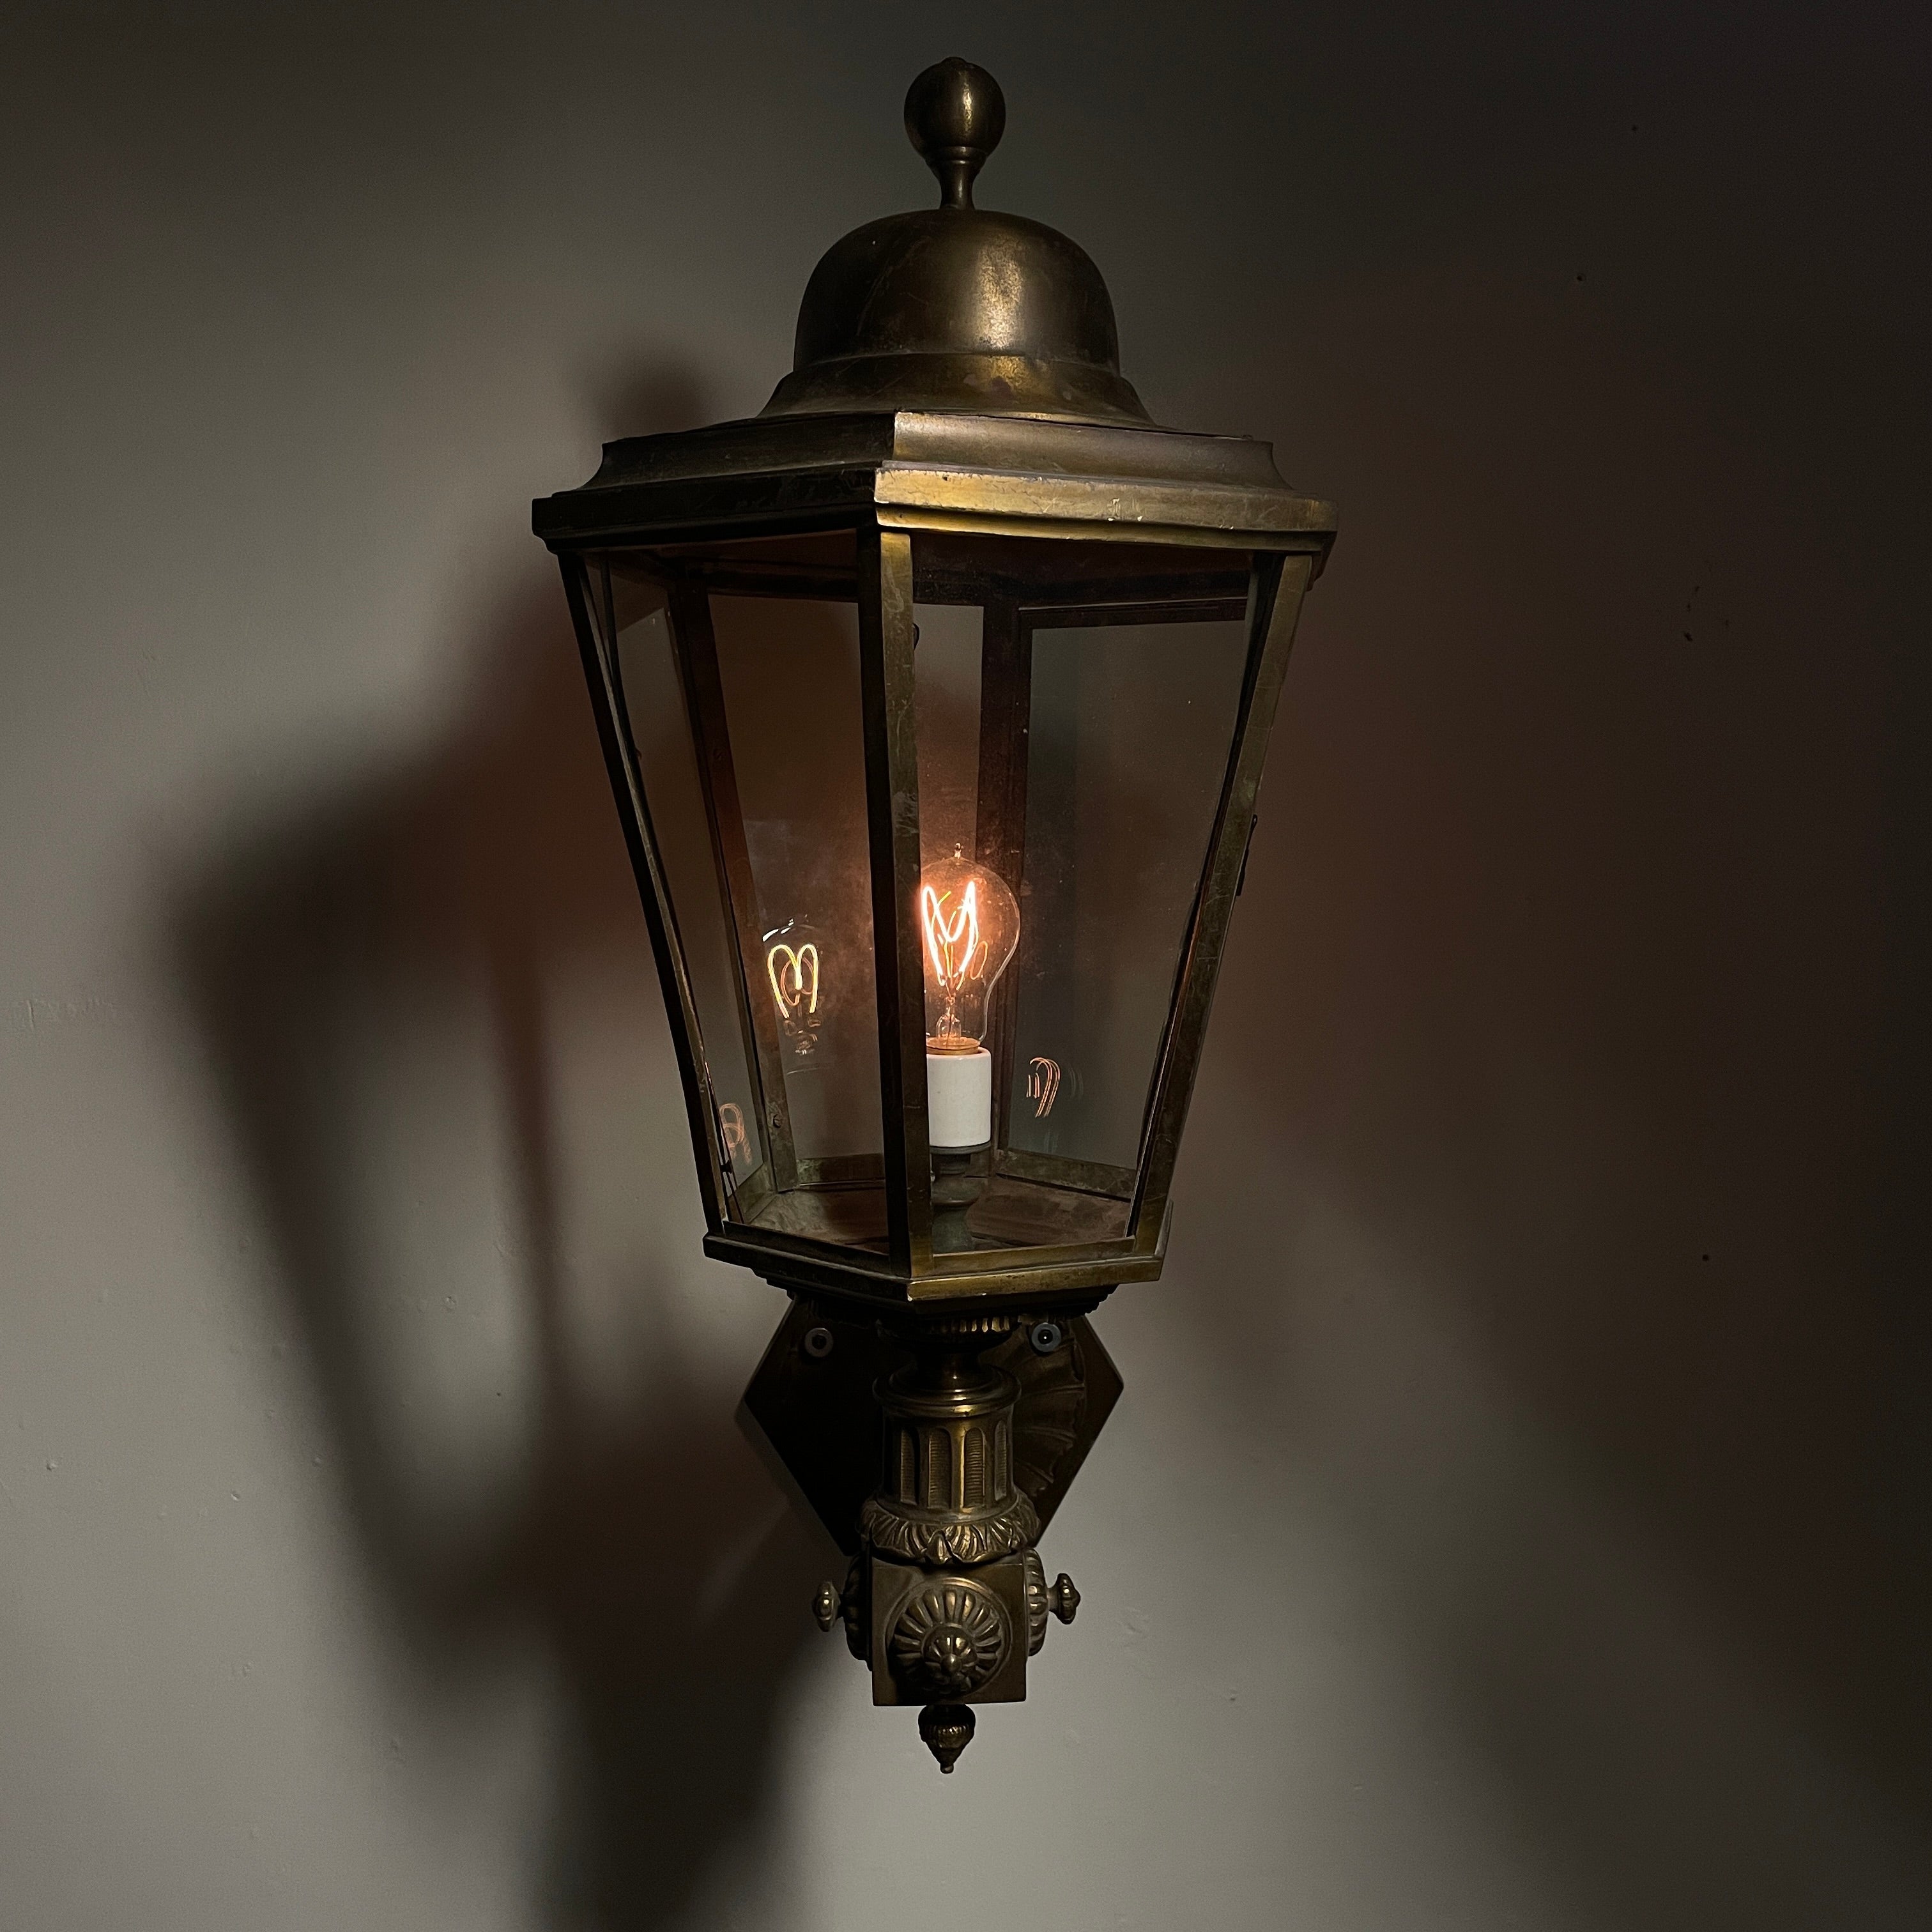 1910 Large Exterior Decorative Brass Lantern Sconce Light